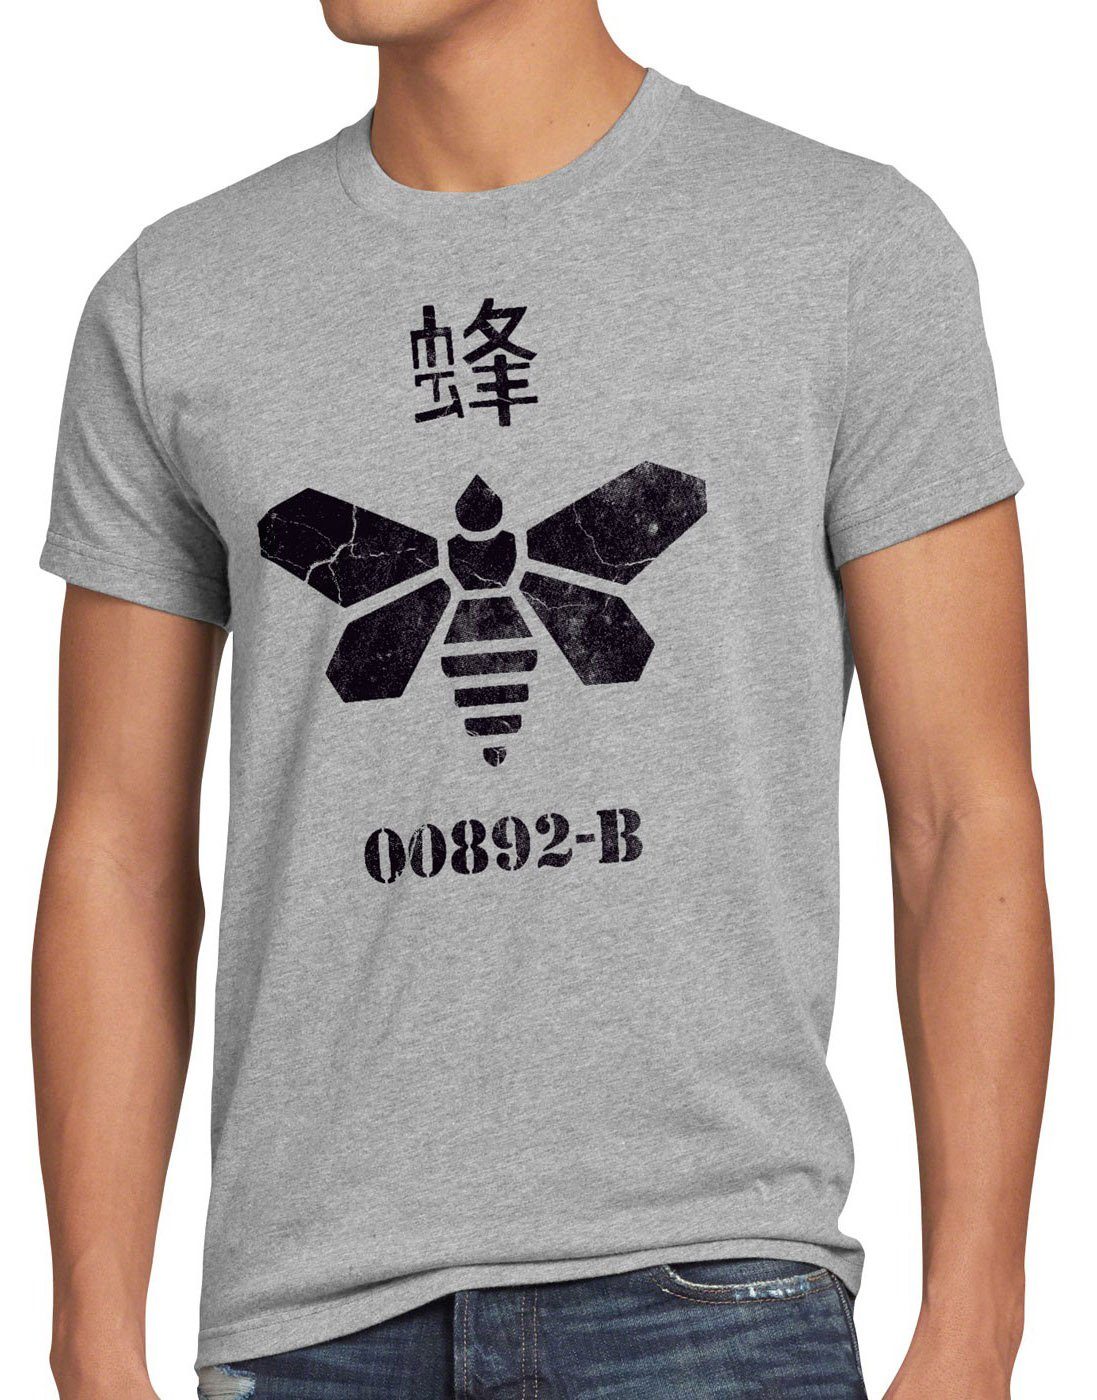 style3 Print-Shirt Herren T-Shirt Golden Moth Chemical breaking walter chemie bad biene heisenberg grau meliert